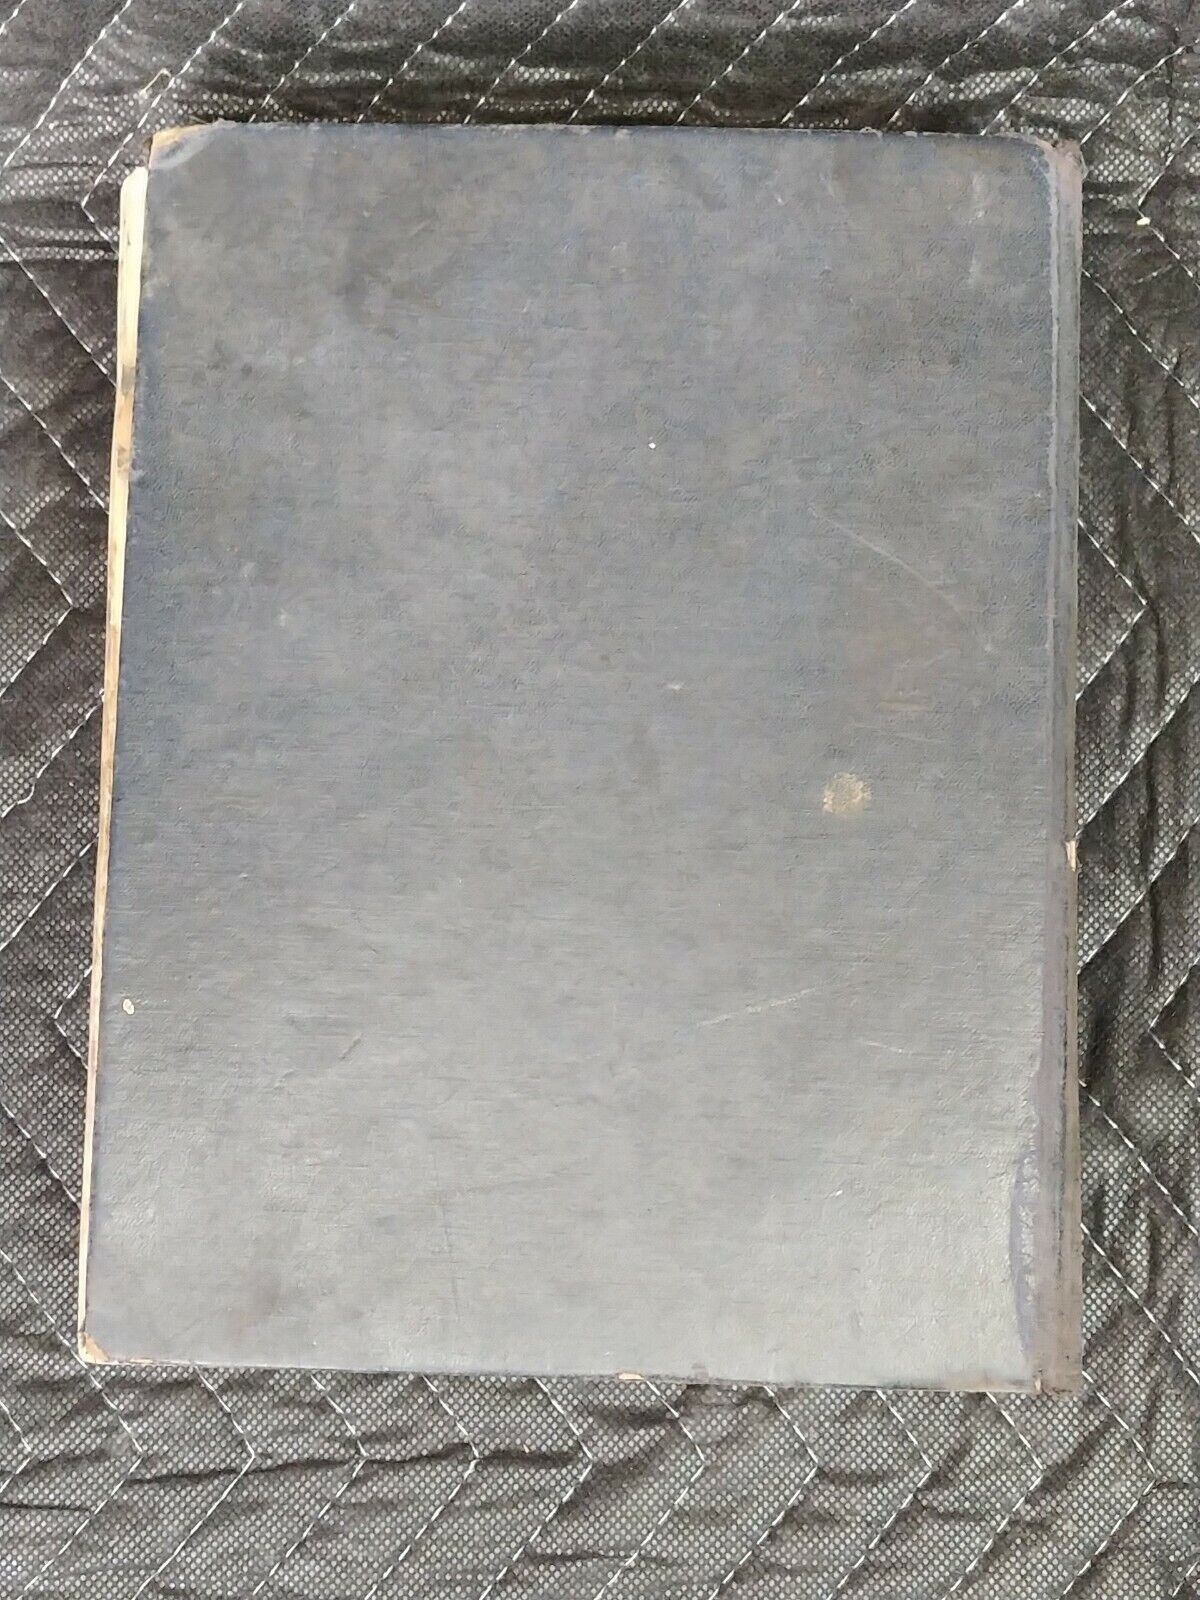 1952 Motors Auto Repair Manual Fifteenth Edition First Printing